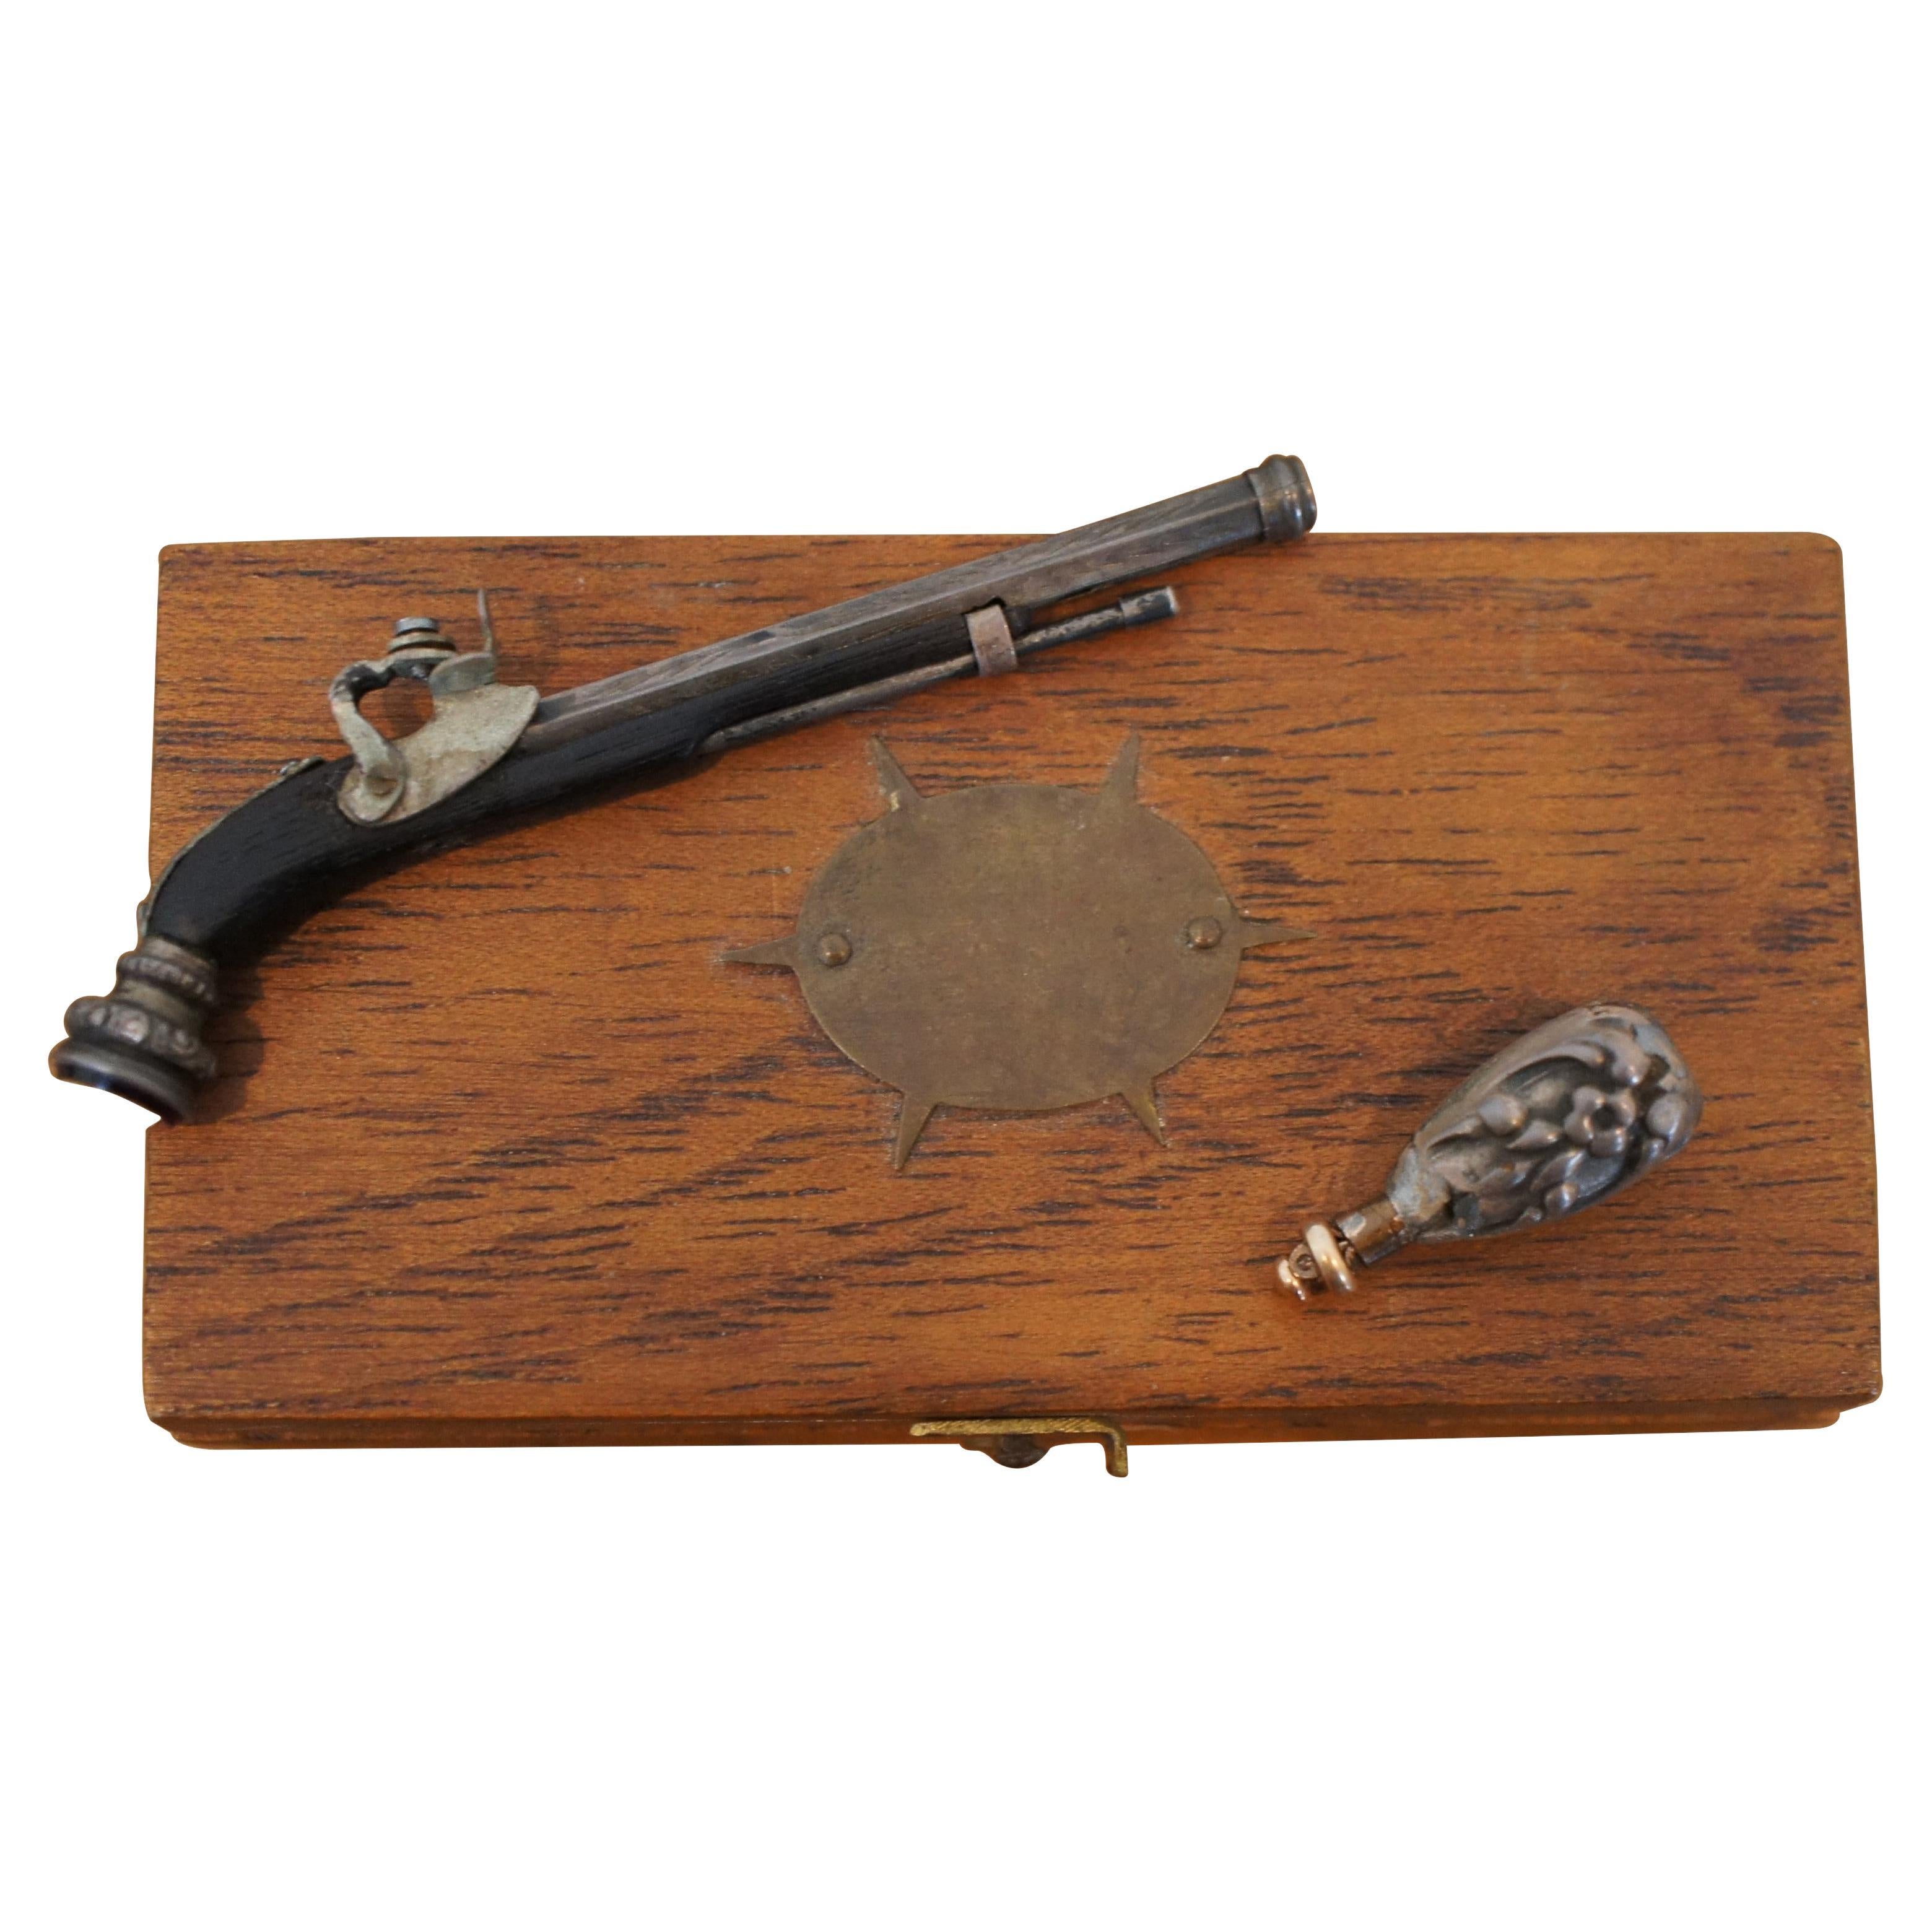 Antique Miniature Toy Replica Flintlock Pistol Rifle Powder Flask & Case 